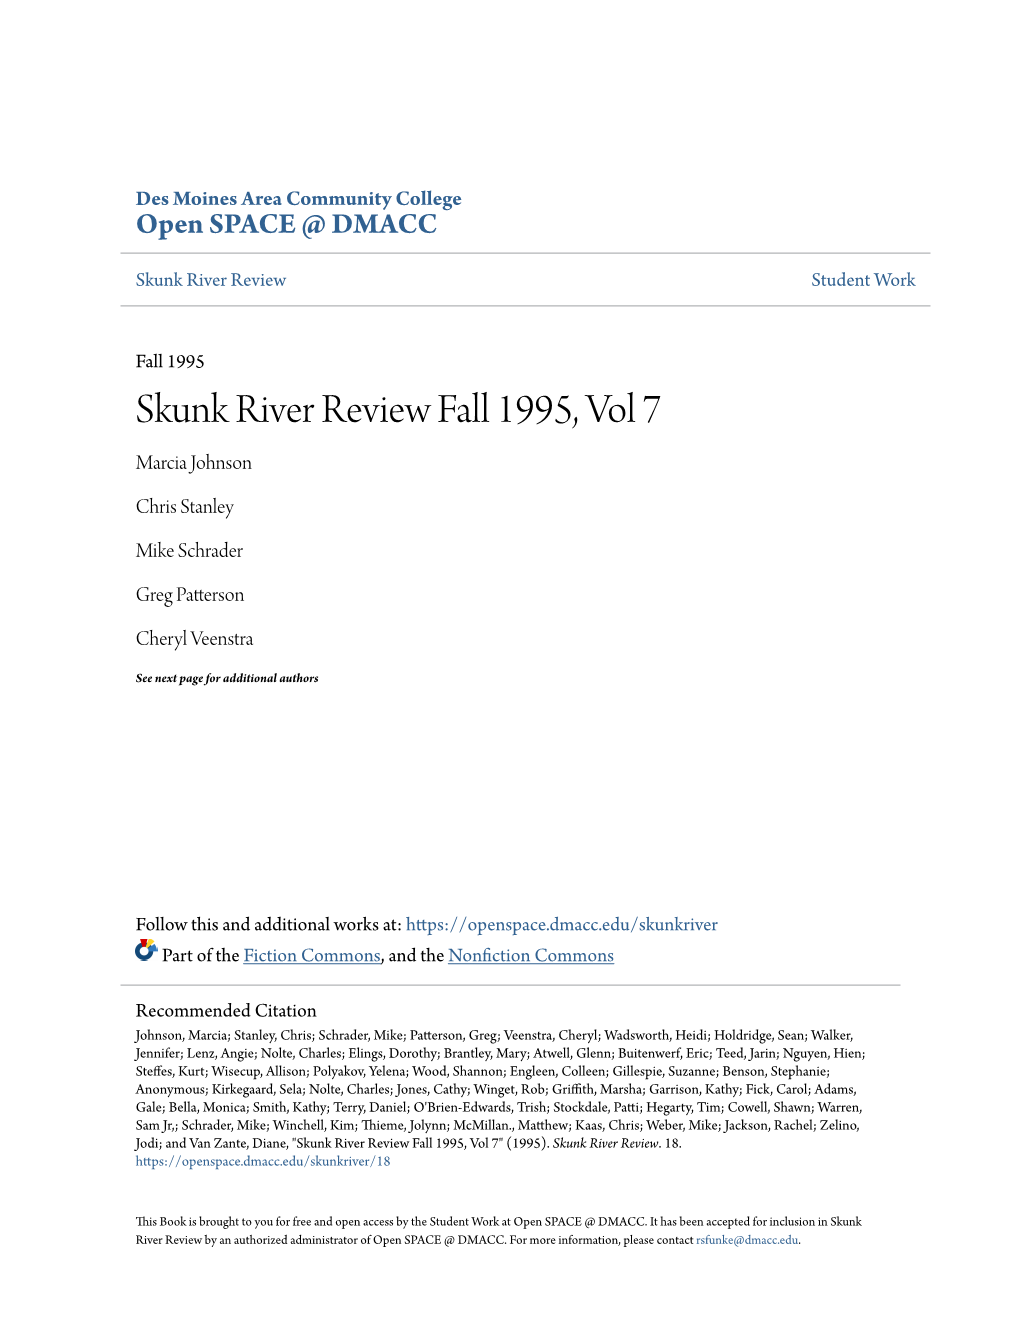 Skunk River Review Fall 1995, Vol 7 Marcia Johnson